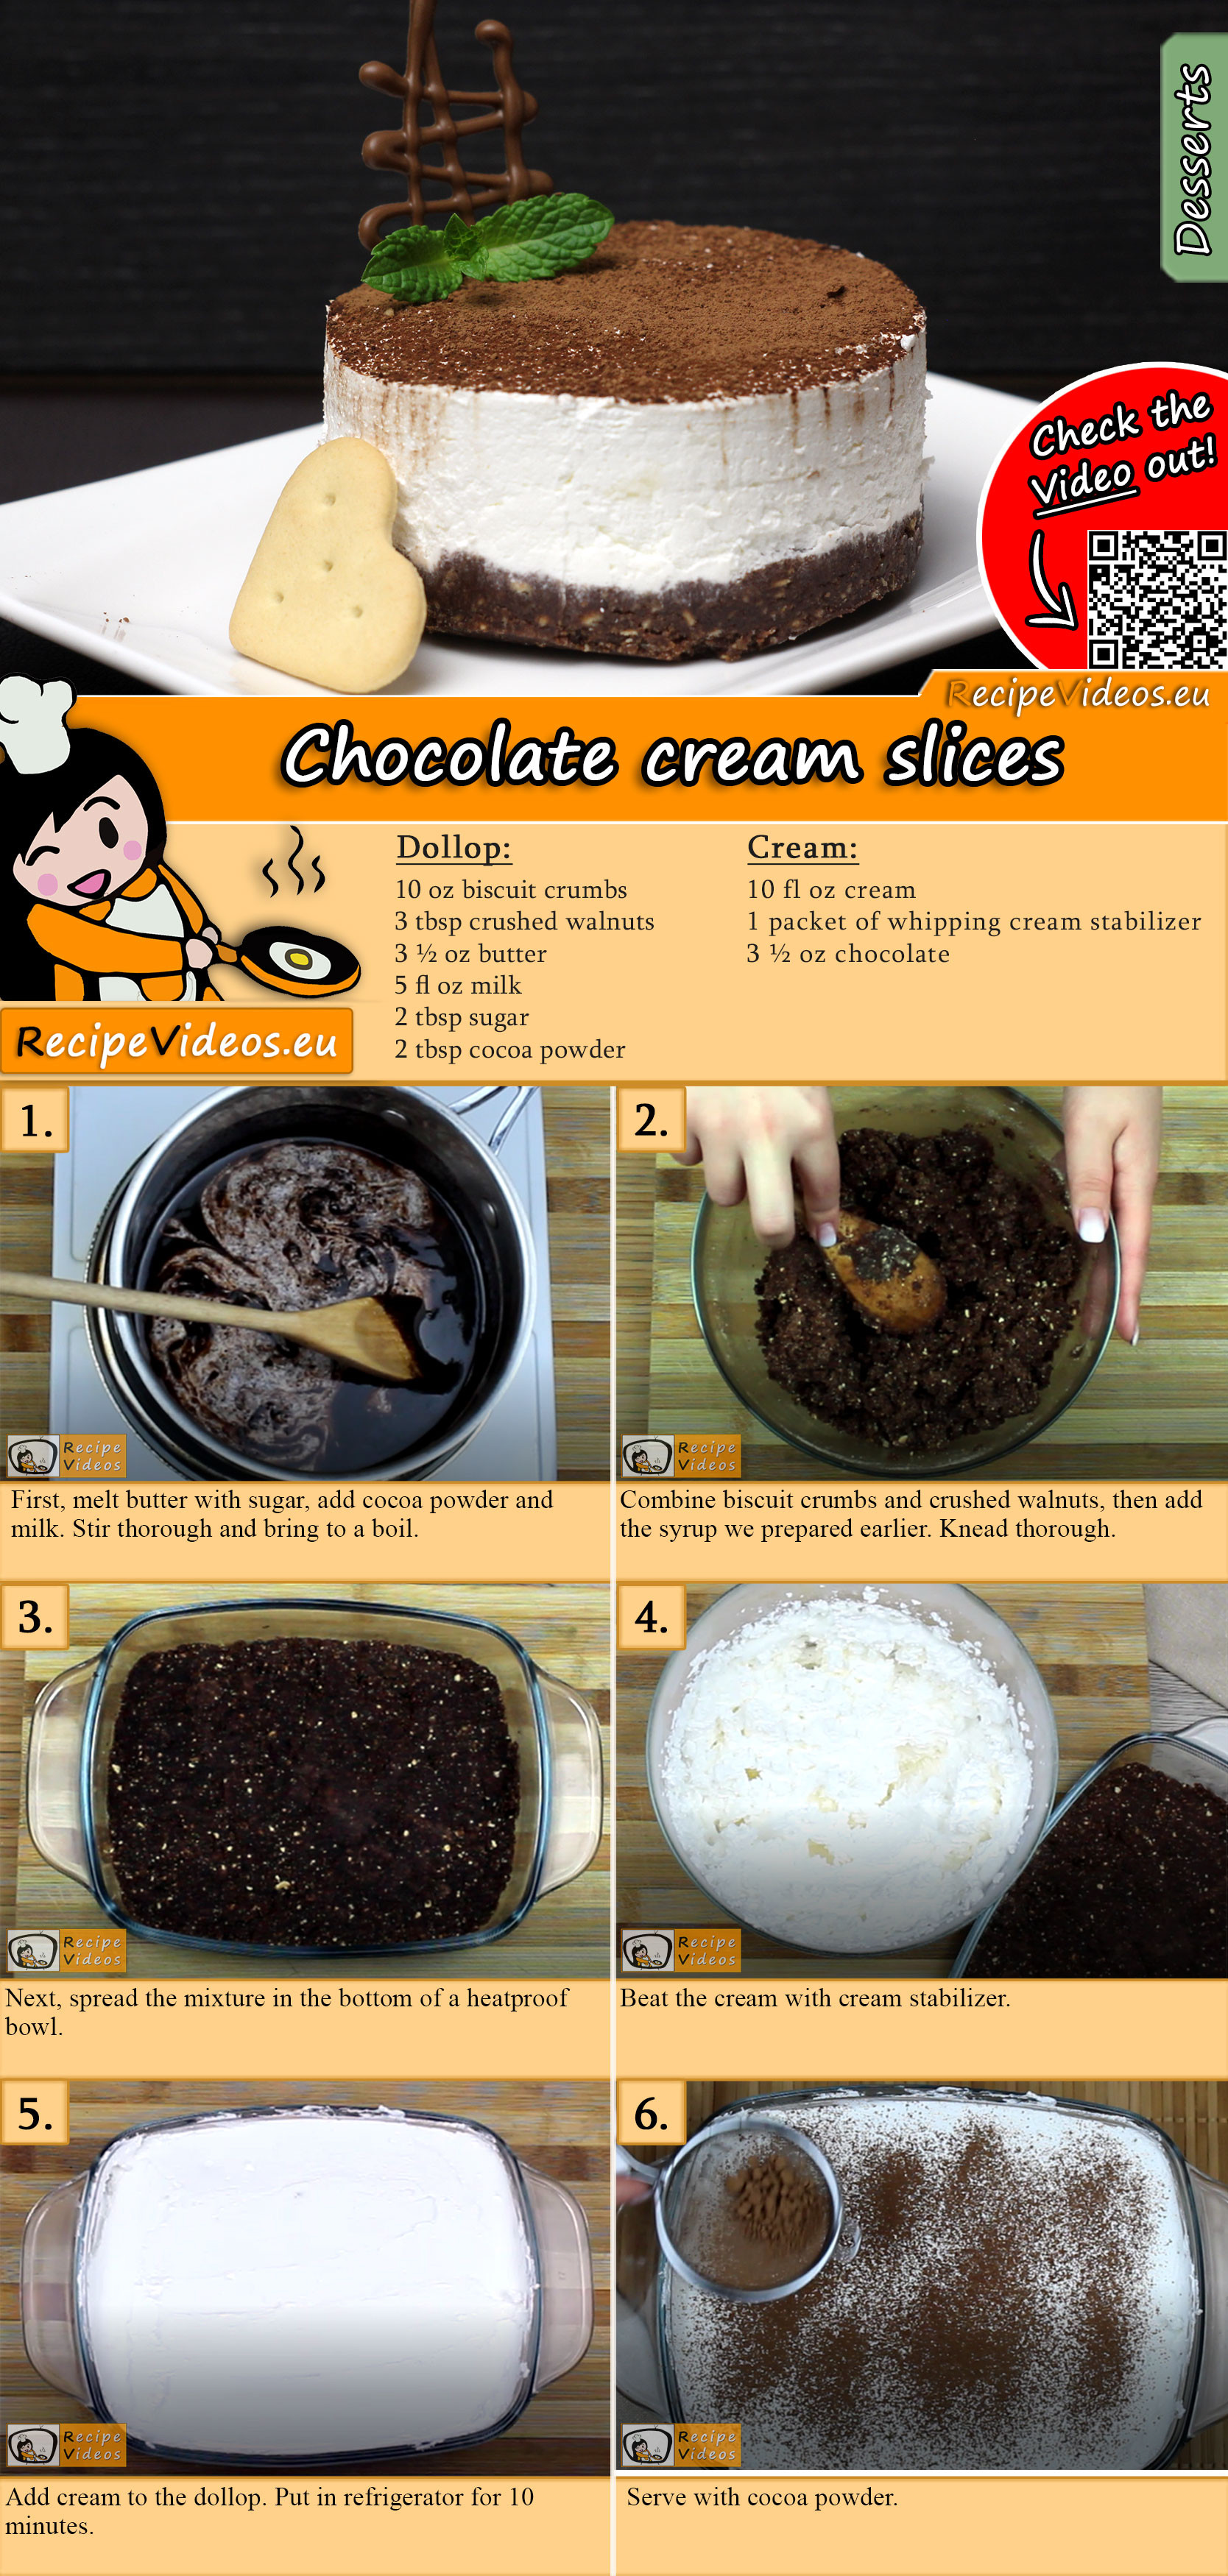 Chocolate cream slices recipe with video